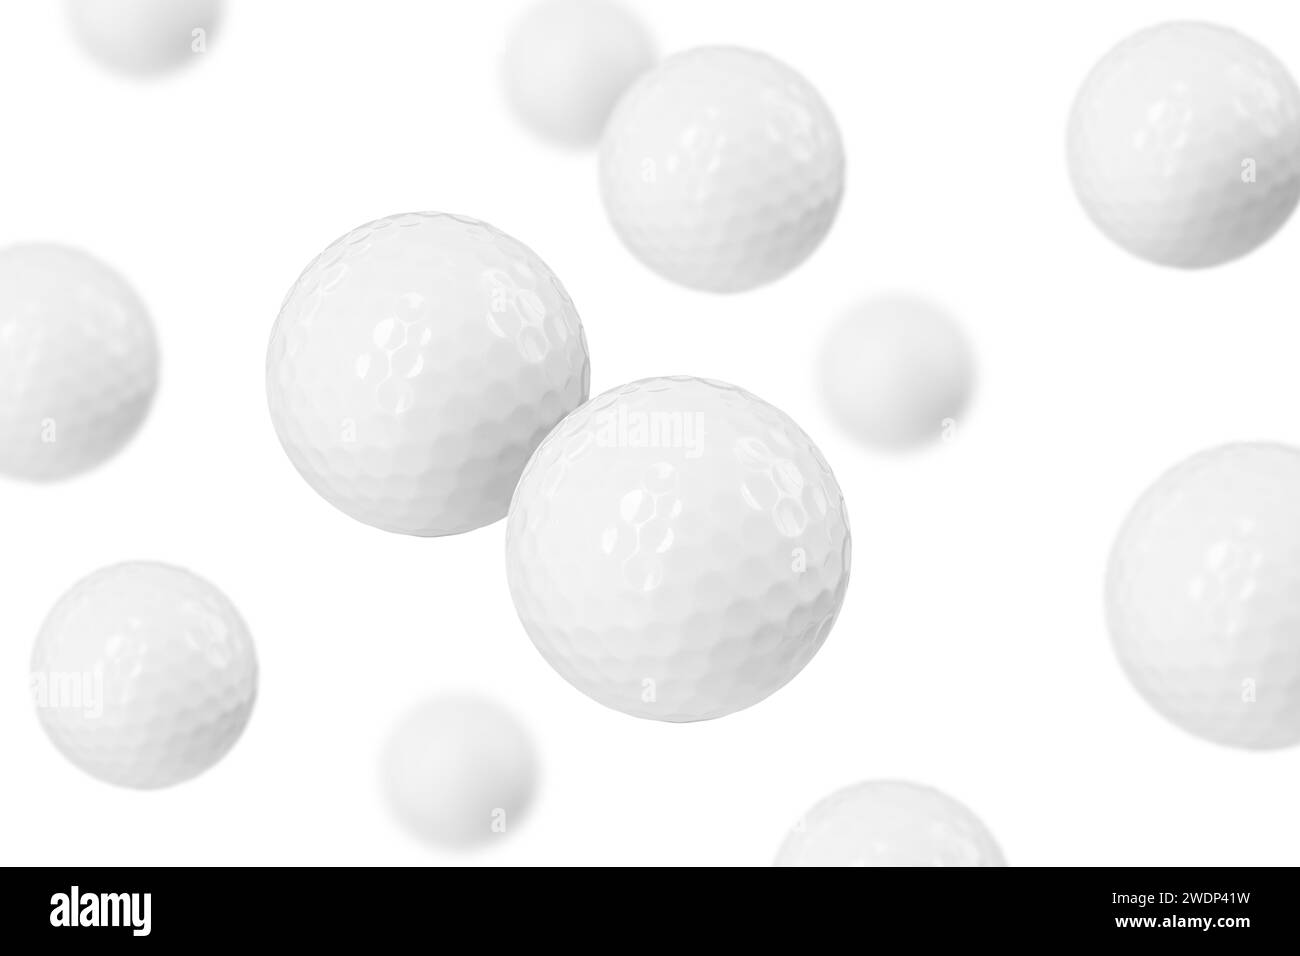 Many golf balls flying on white background Stock Photo - Alamy